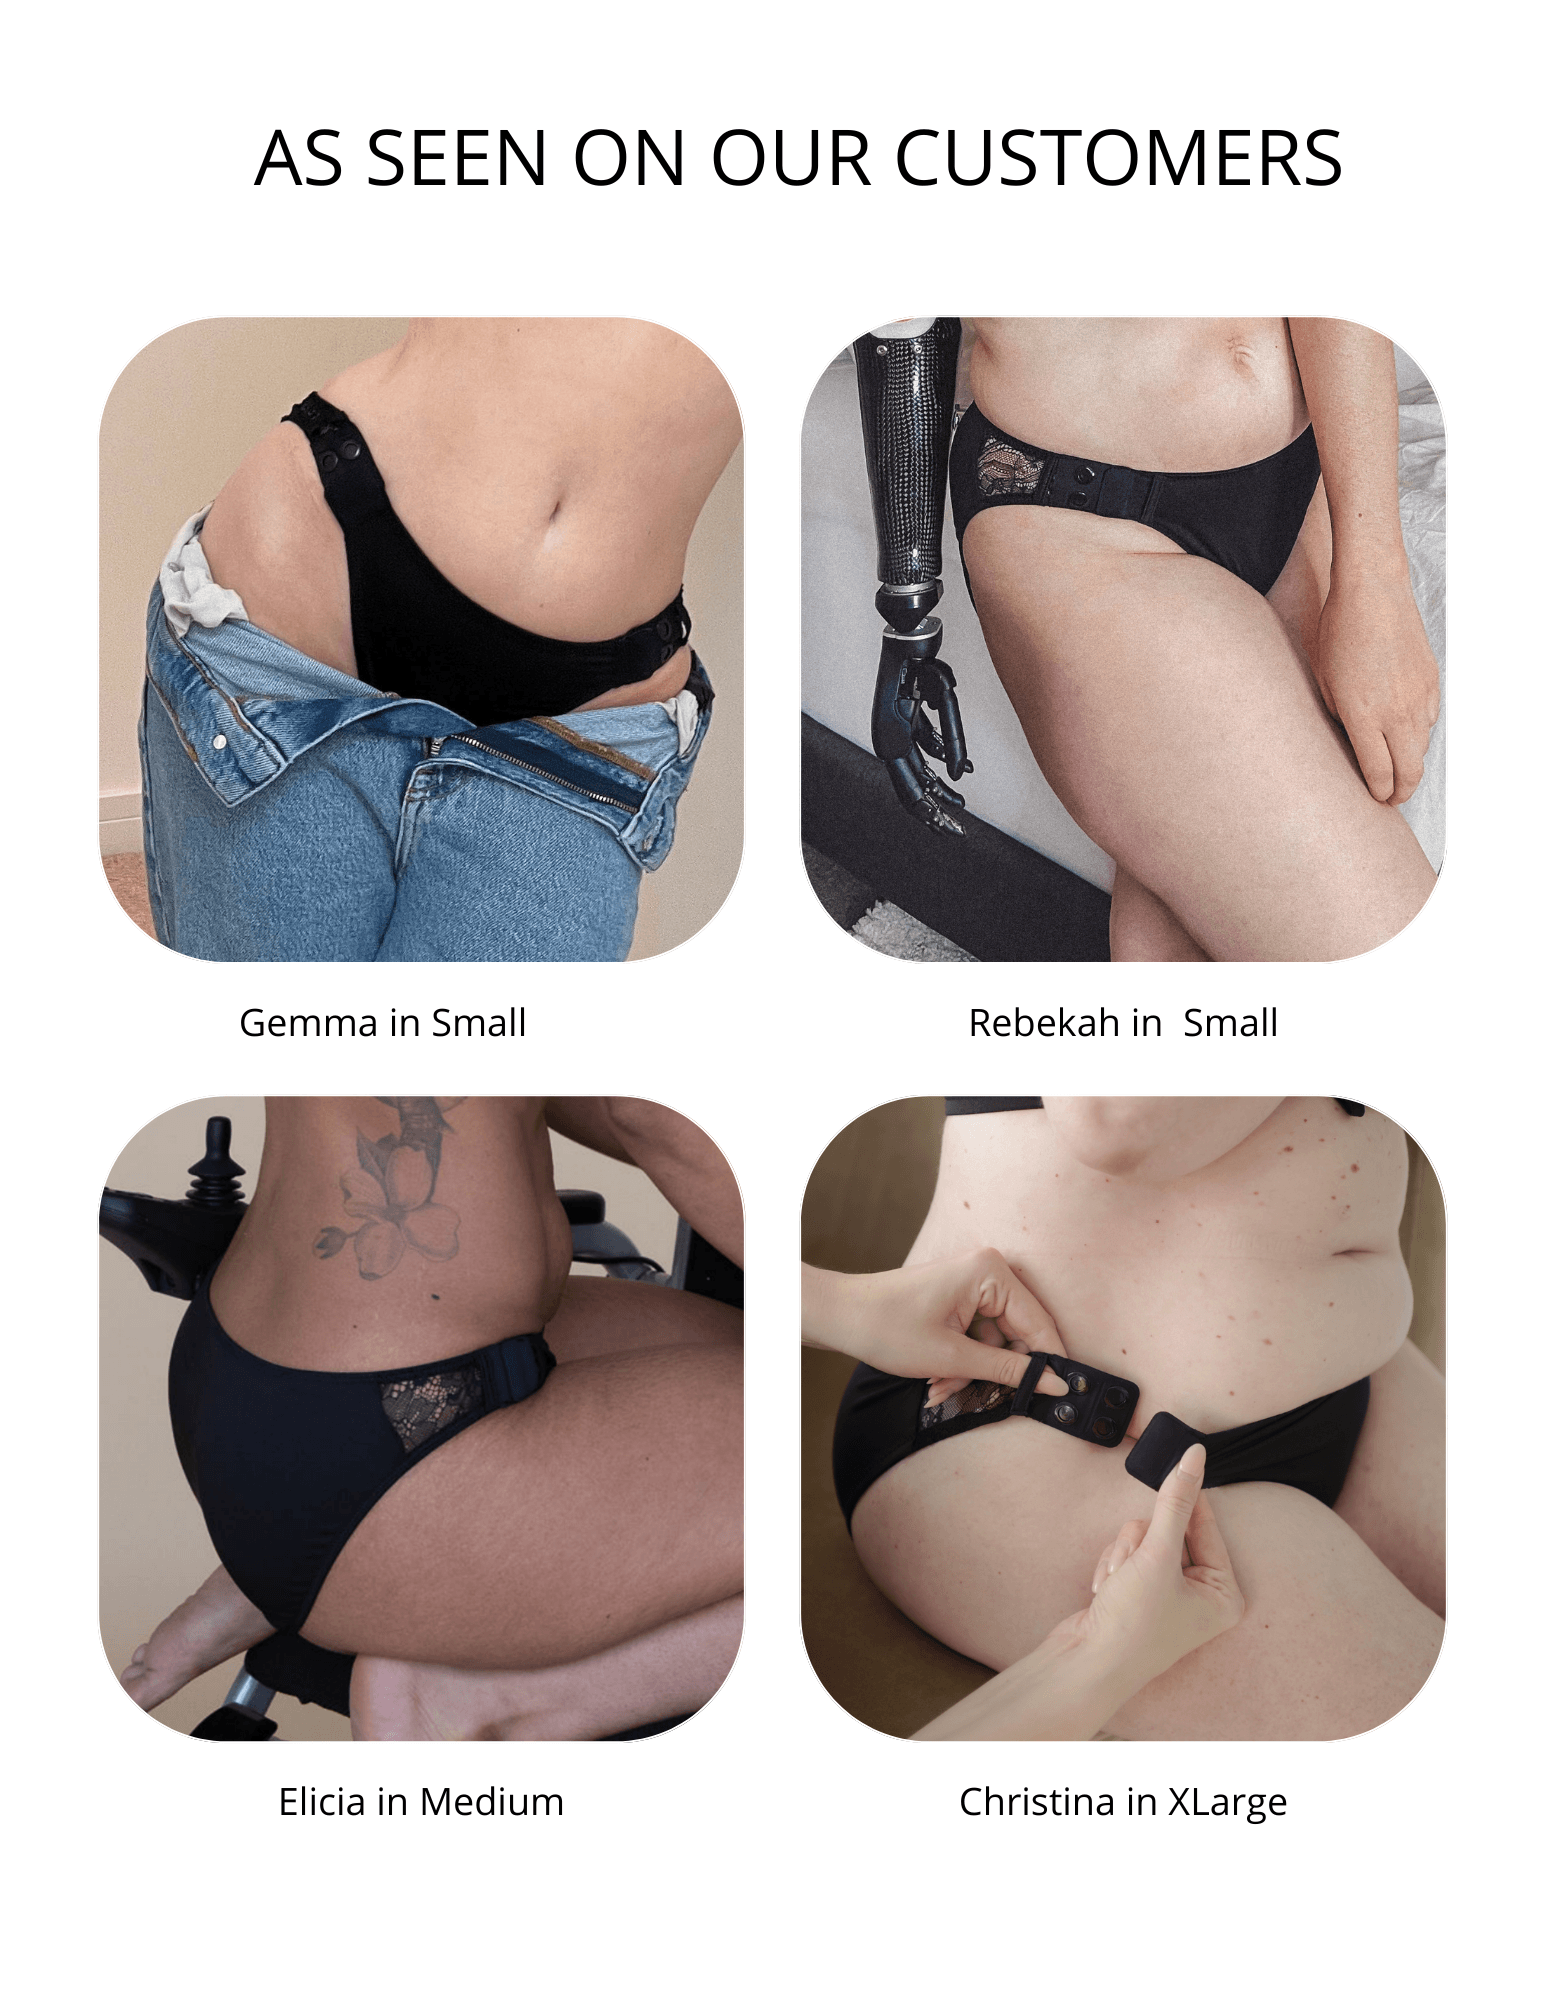 Adaptive Side-Opening Underwear – Liberare